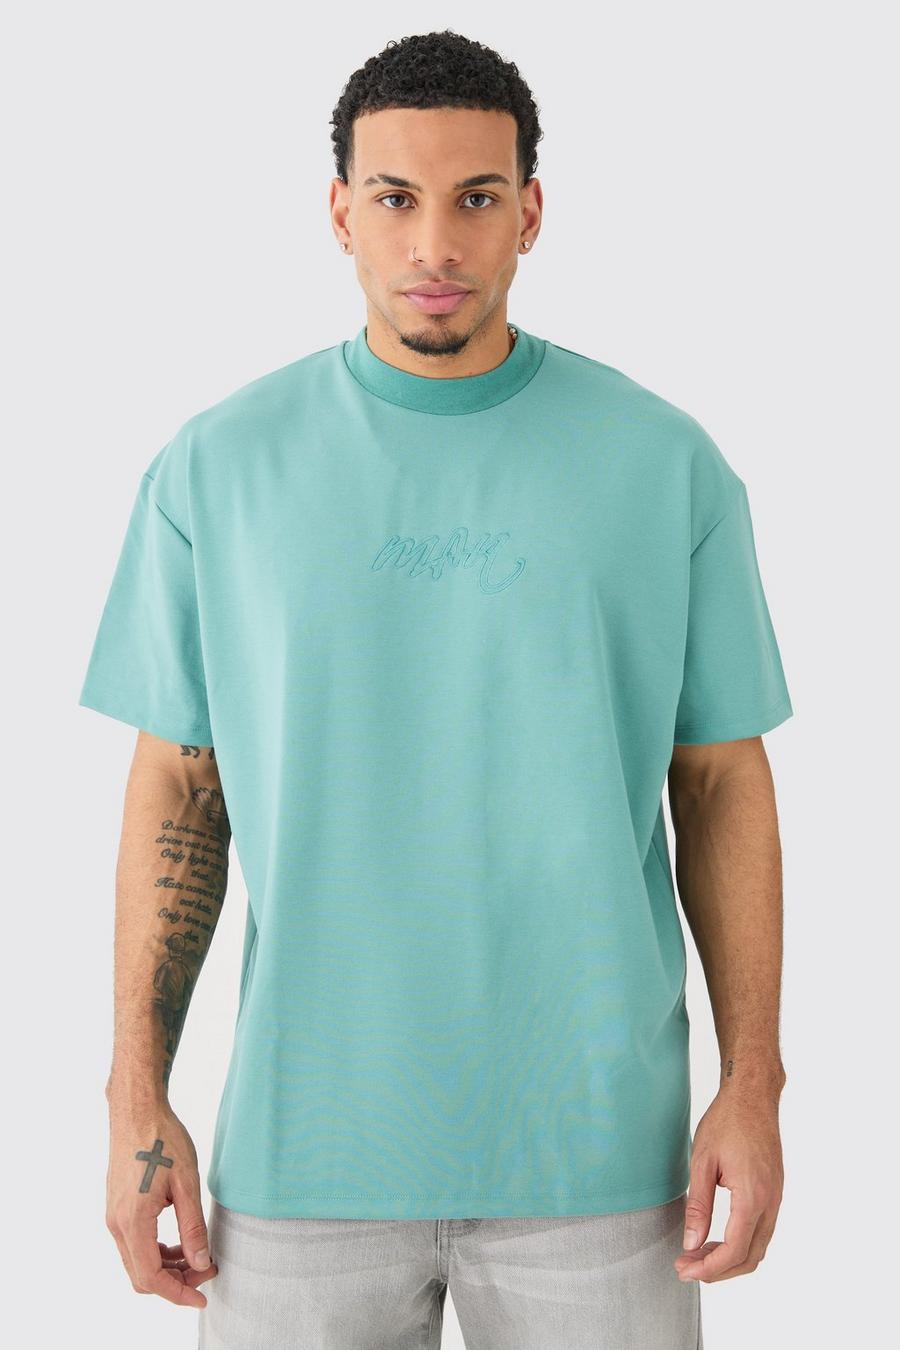 Camiseta oversize Premium súper gruesa bordada, Teal